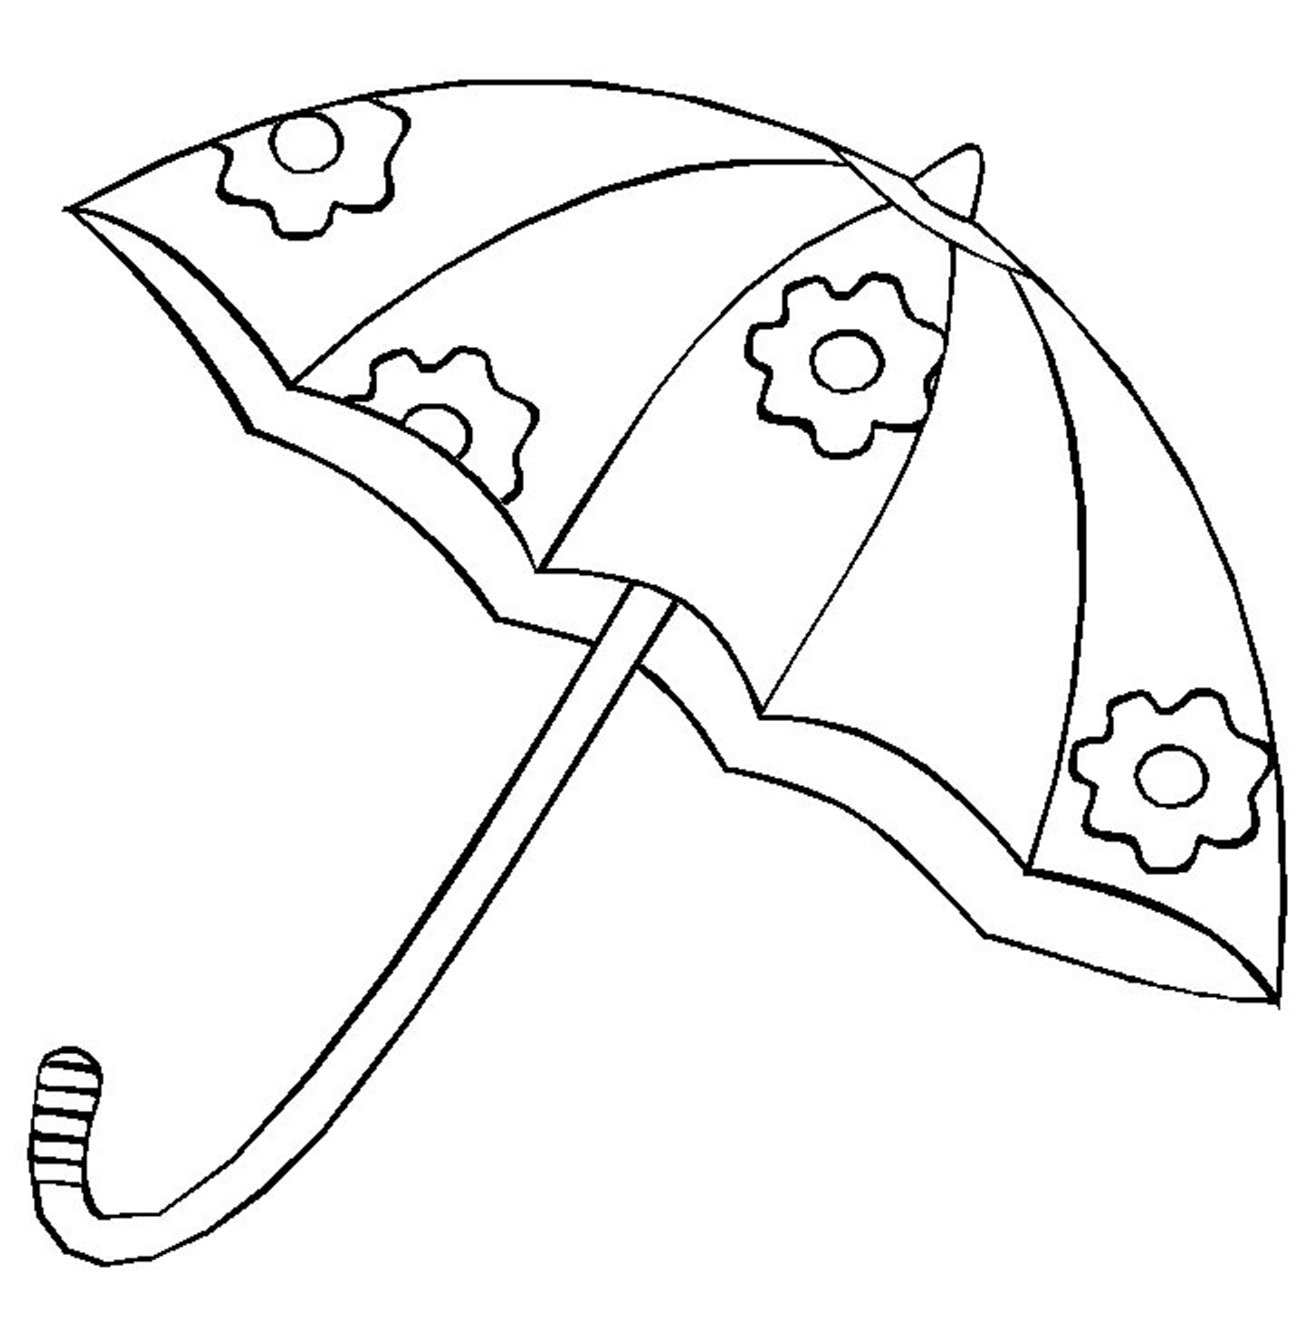 Umbrella with flowers